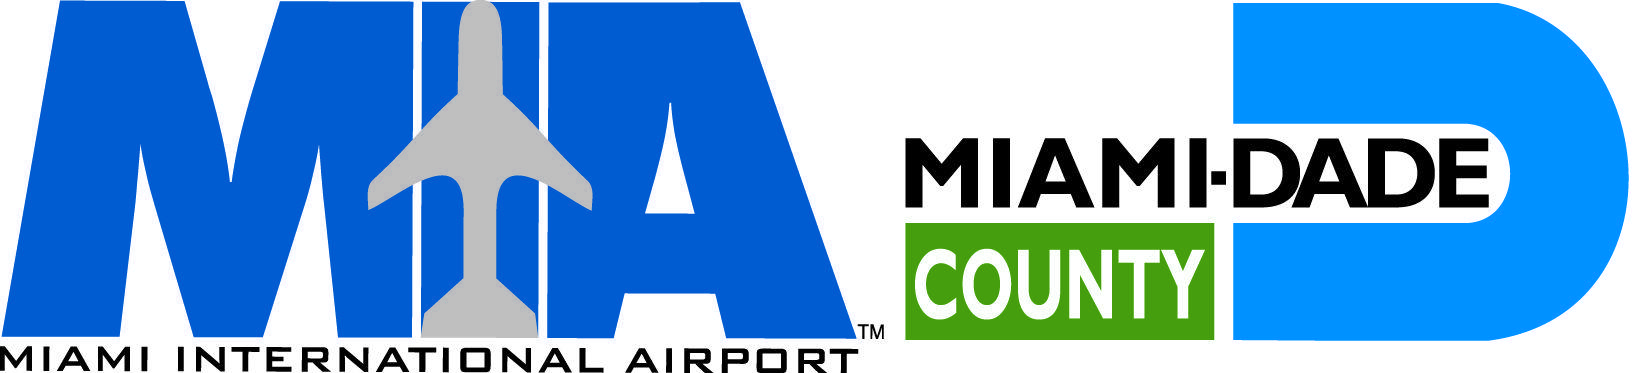 Miami International Airport Logo - Customer Service International Airport